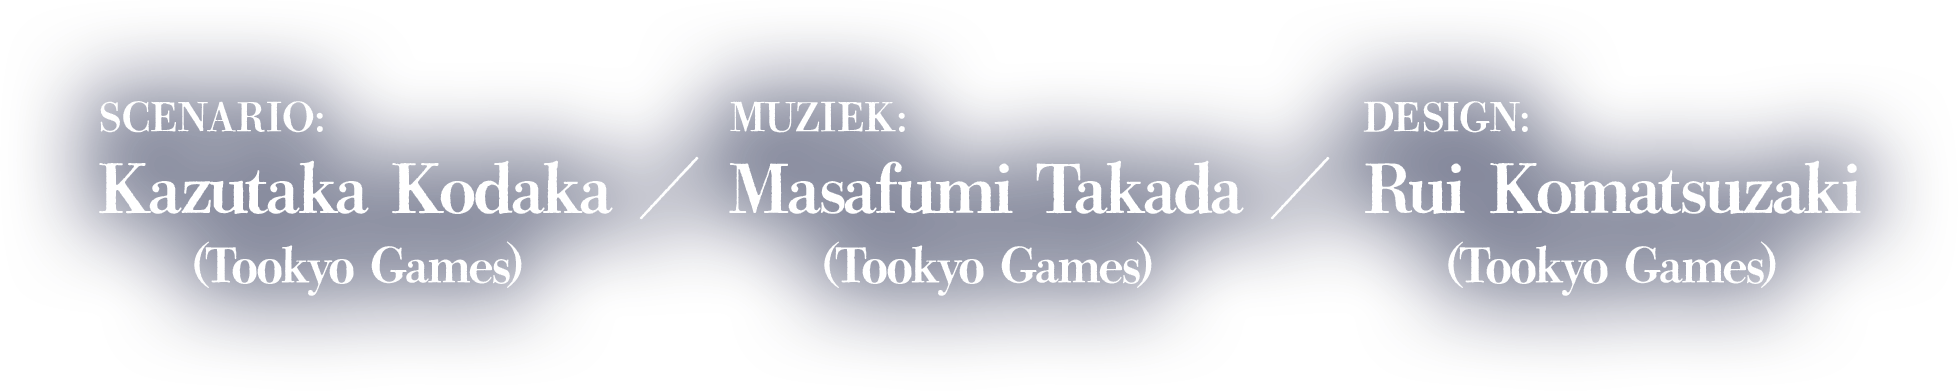 Scenario:Kazutaka Kodaka (Tookyo Games)Muziek:Masafumi Takada (Tookyo Games)Design:Rui Komatsuzaki (Tookyo Games)